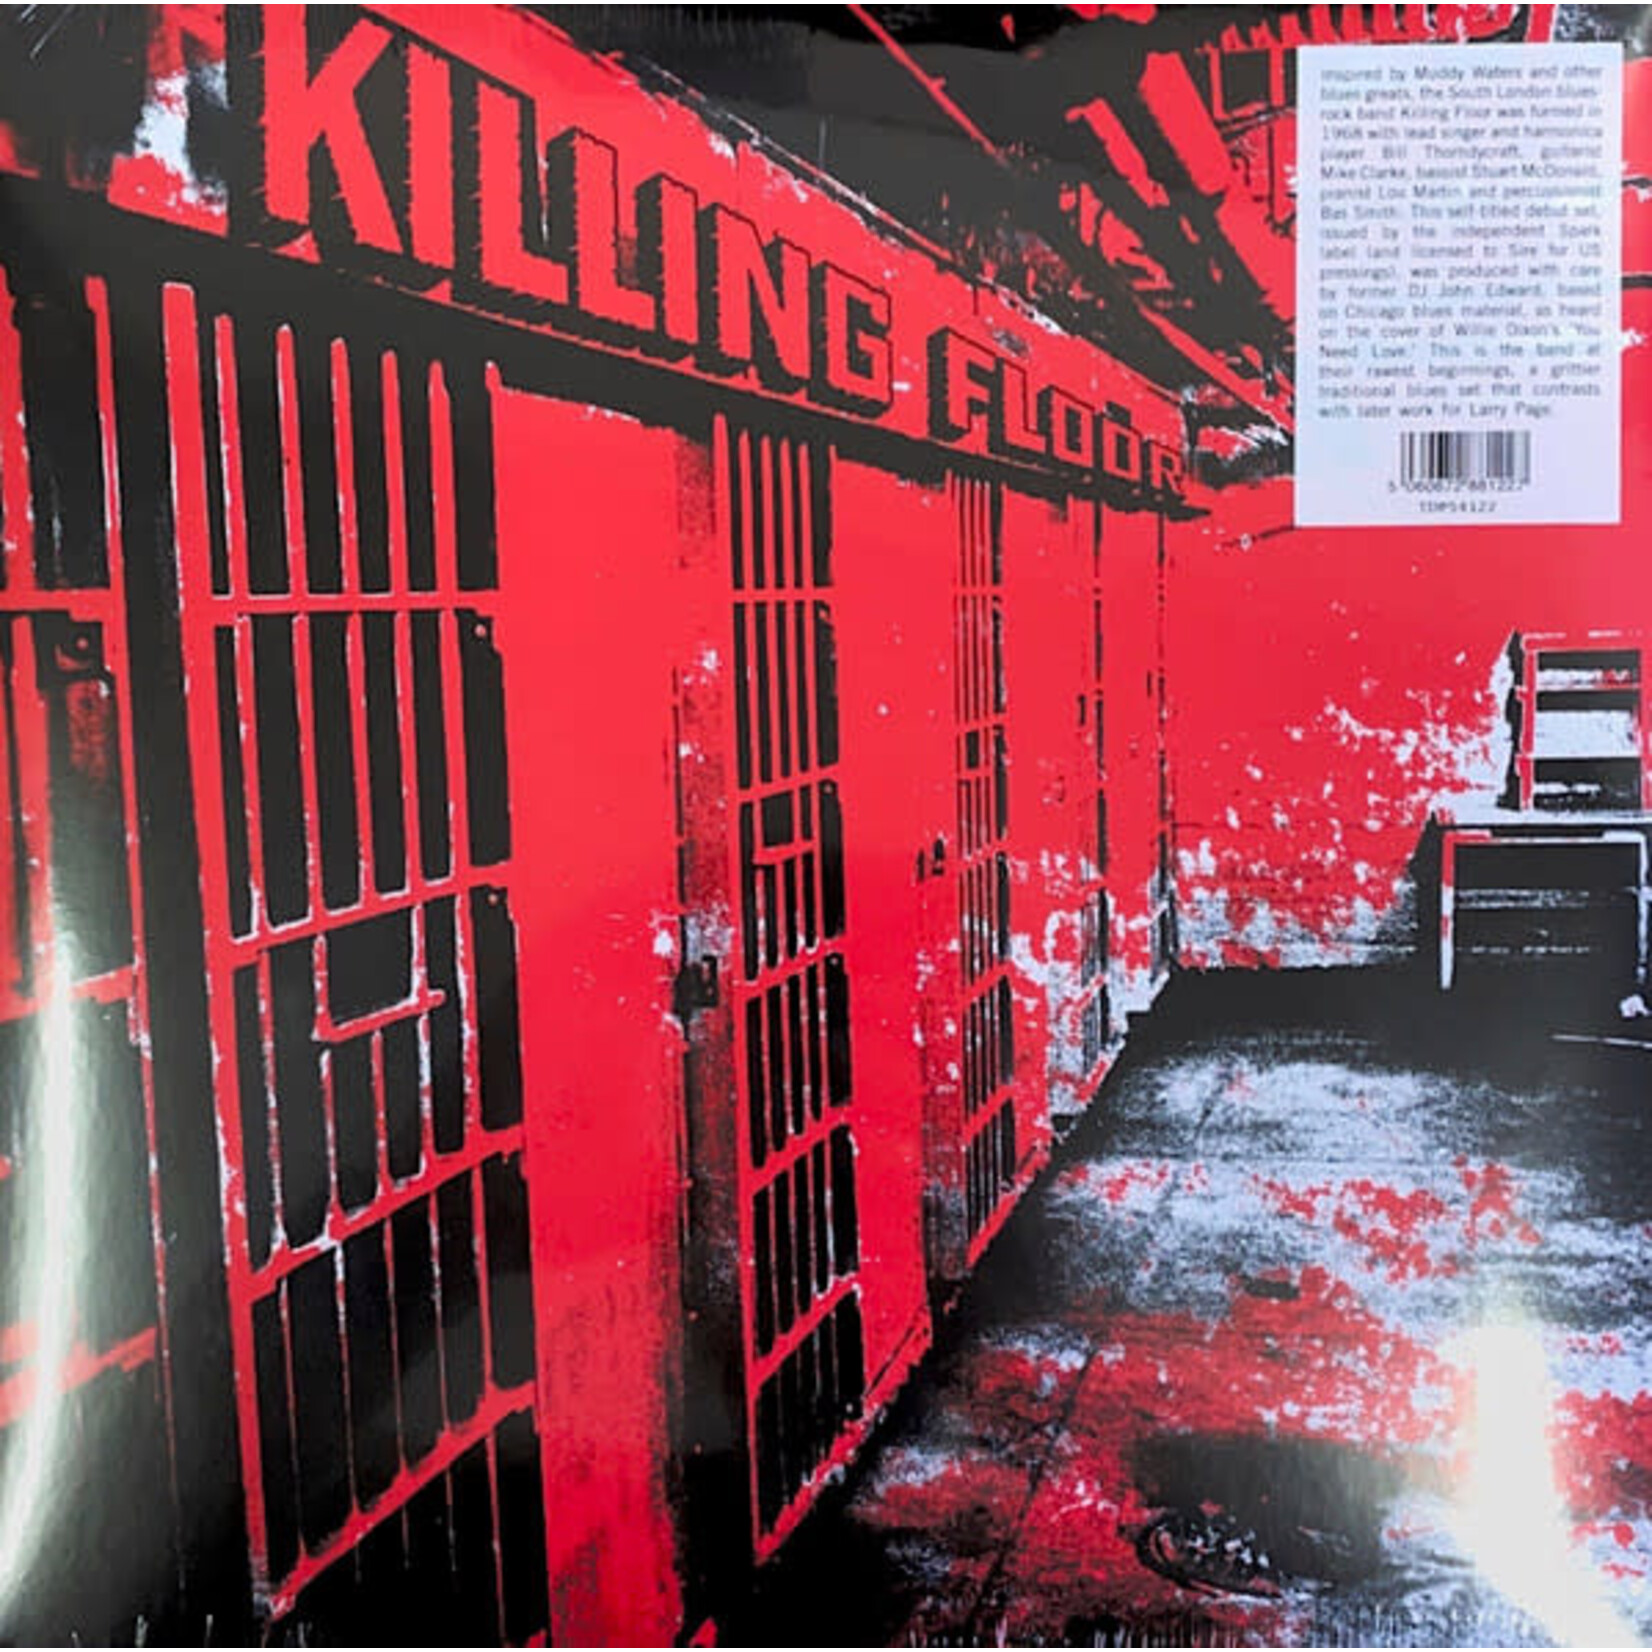 [New] Killing Floor - Killing Floor